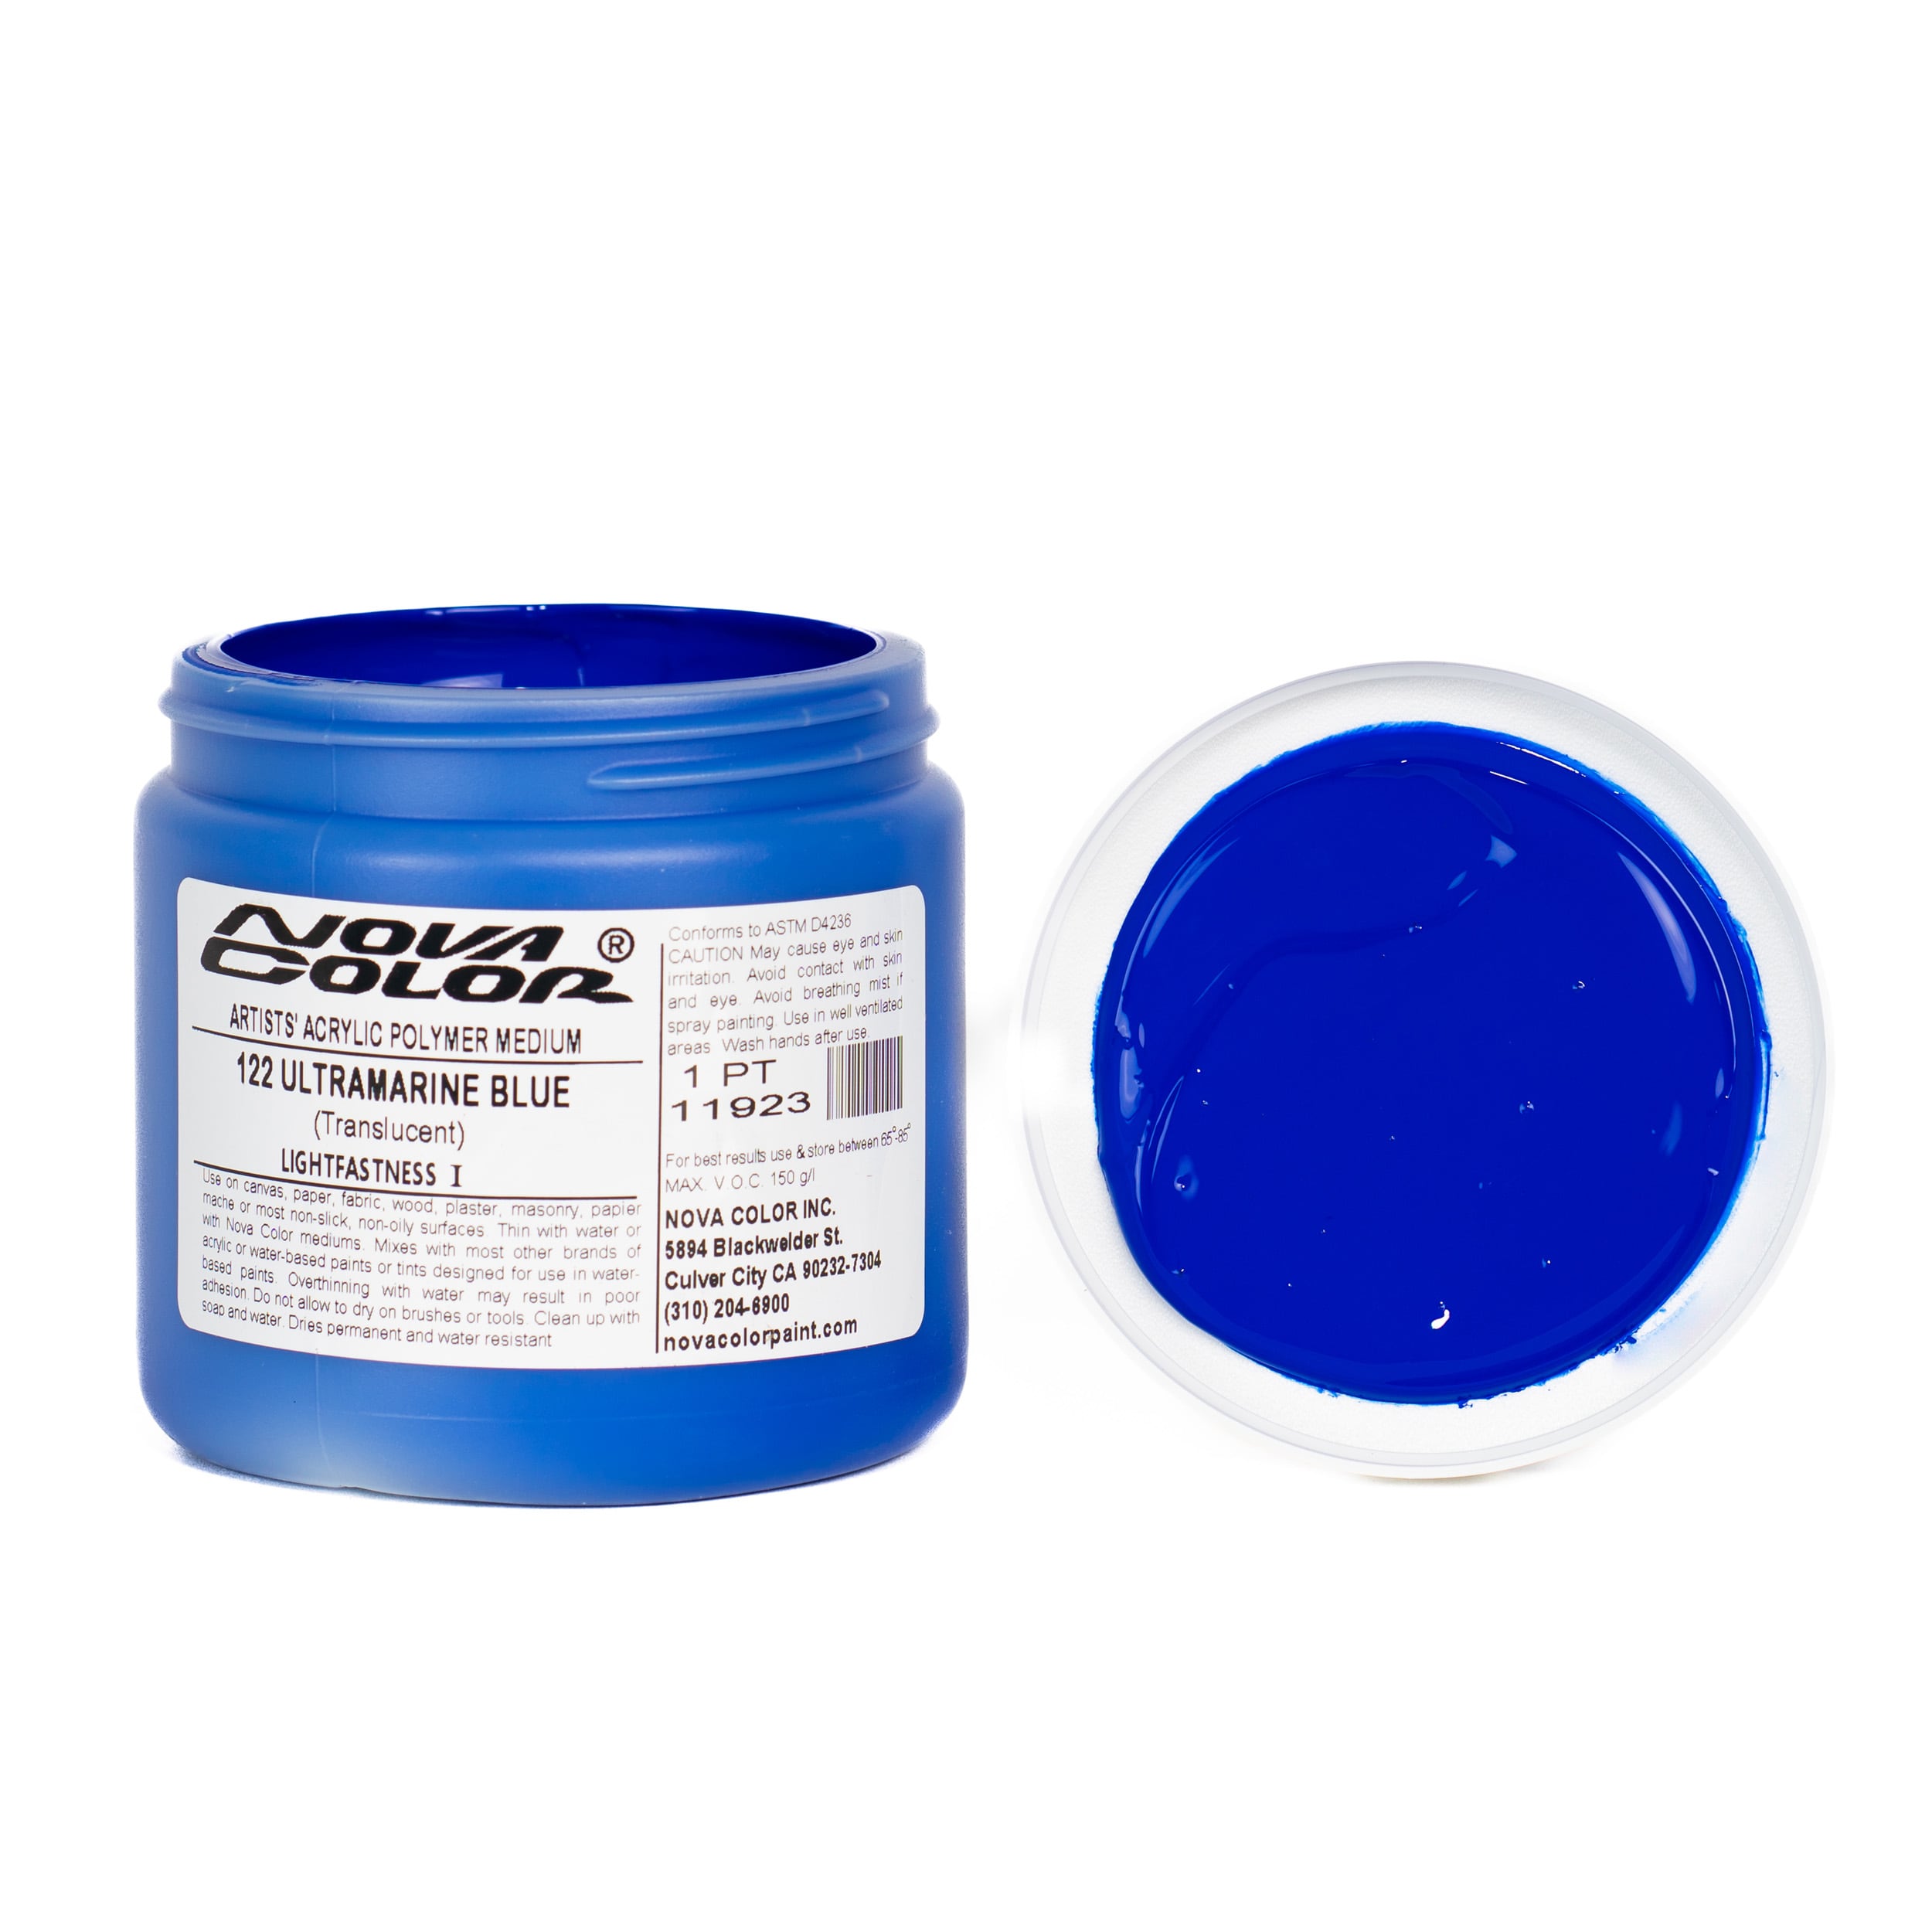 Buy Ultramarine Blue Acrylic Paint Online